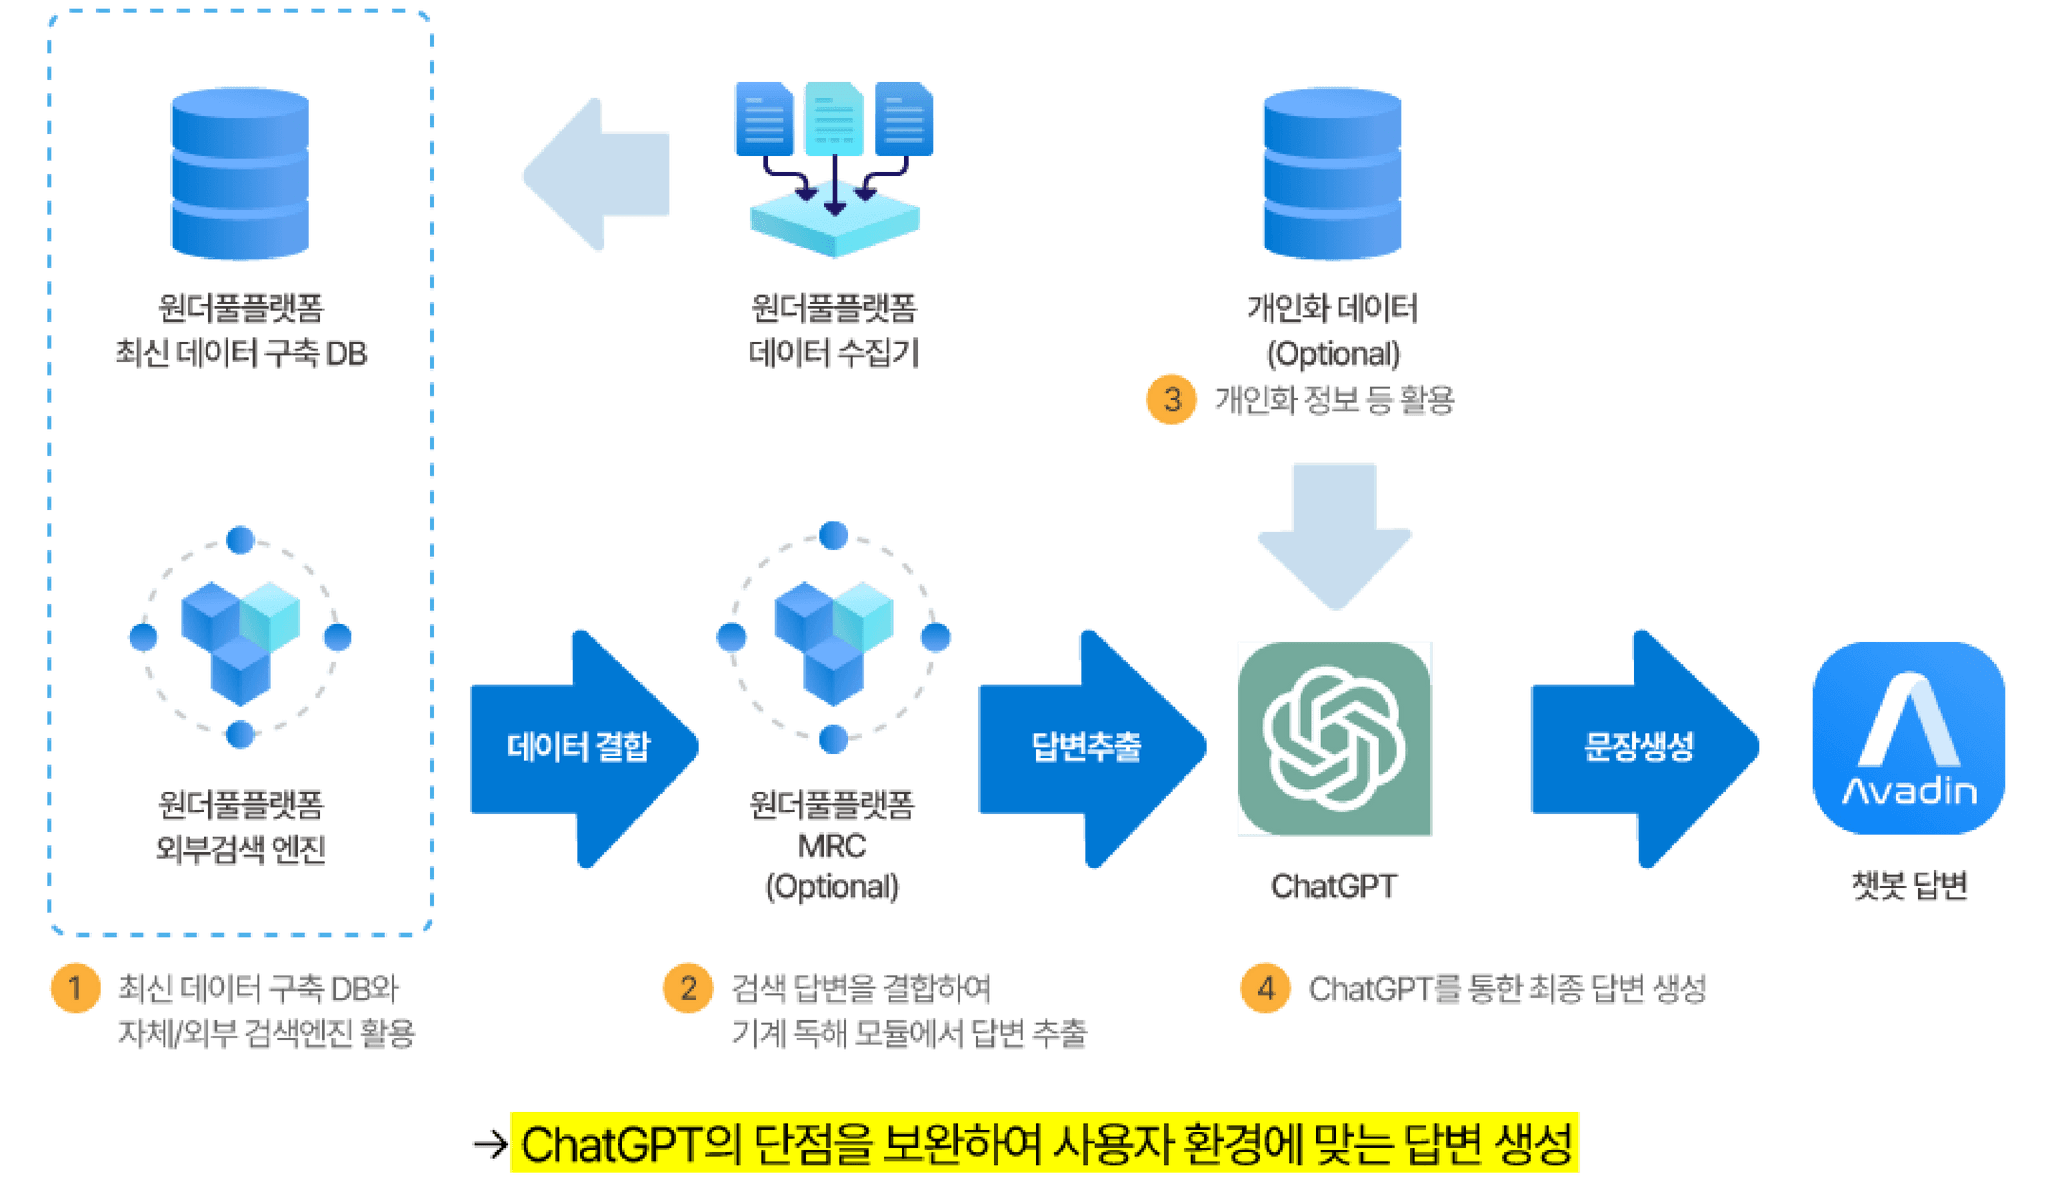 Chatbot based on ChatGPT